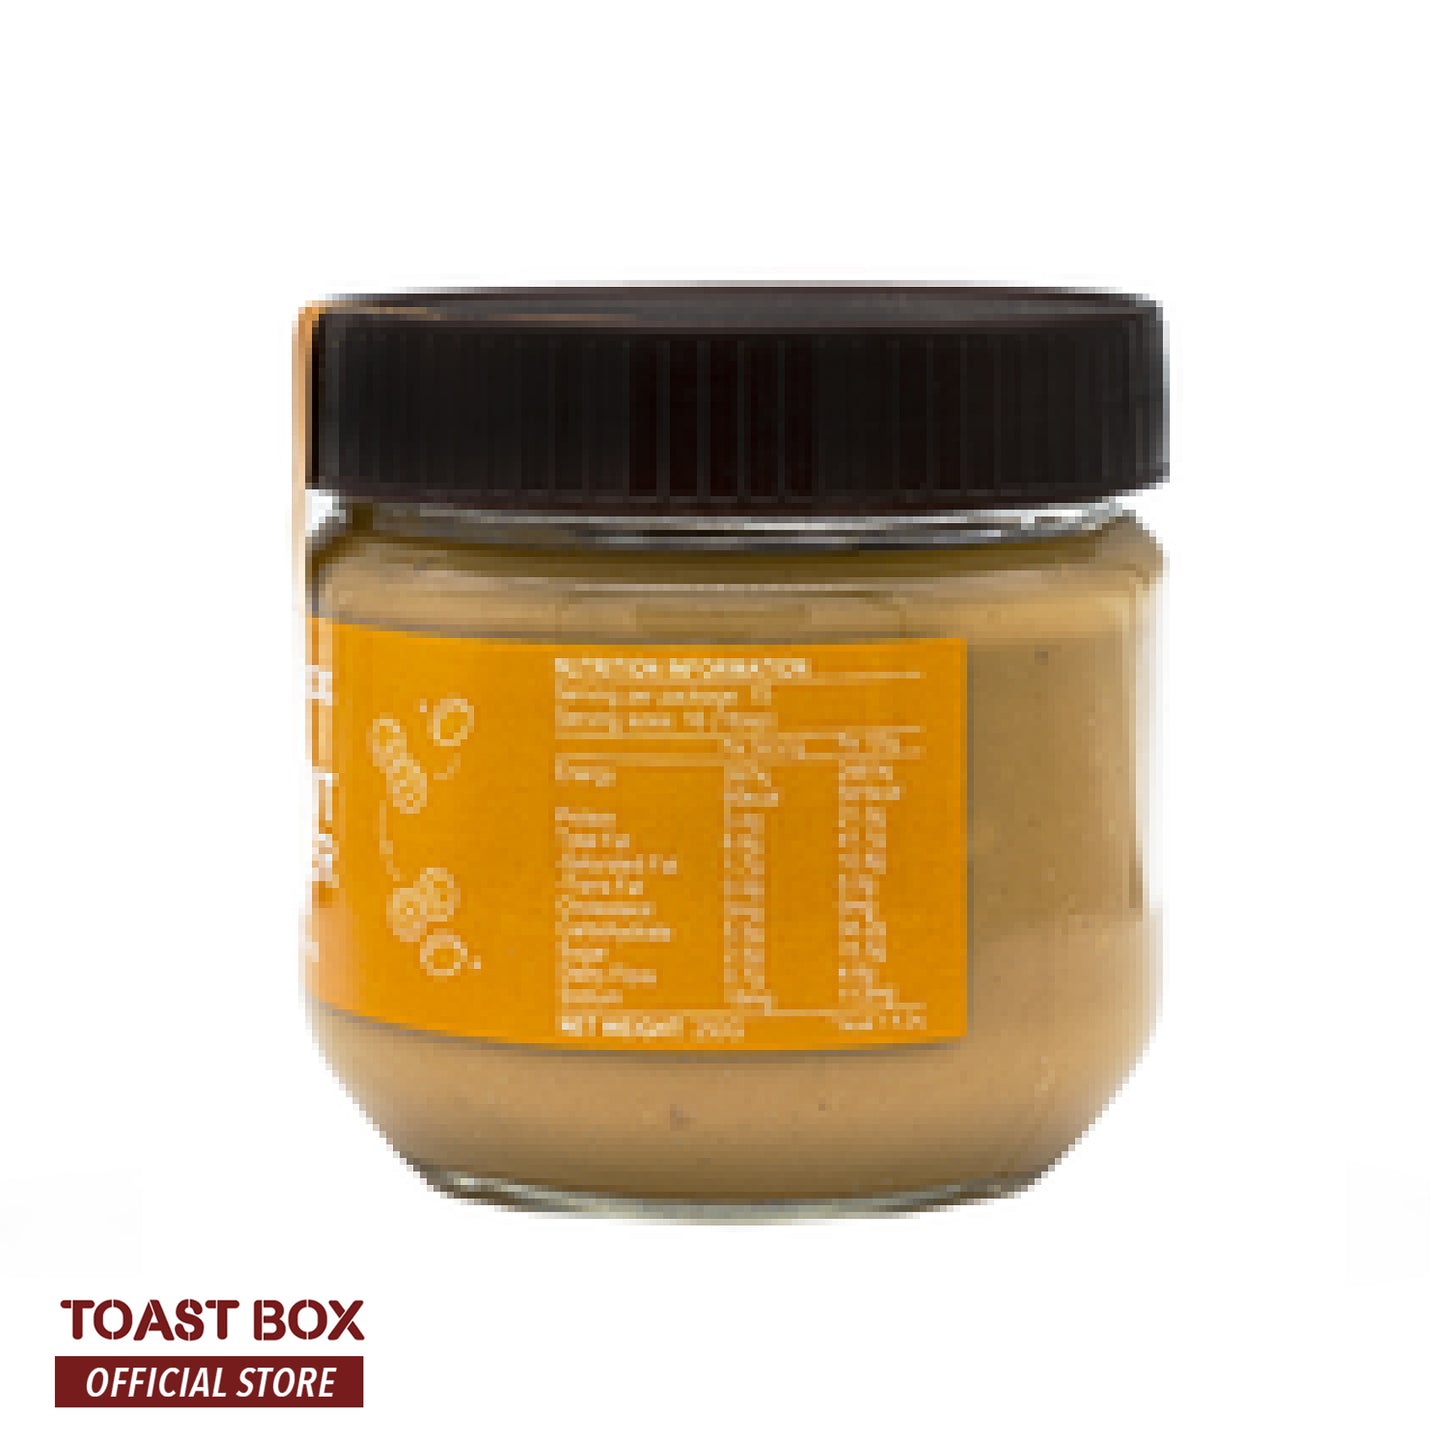 [Toast Box] Crunchy Peanut Butter 250gm - Bloom Concept